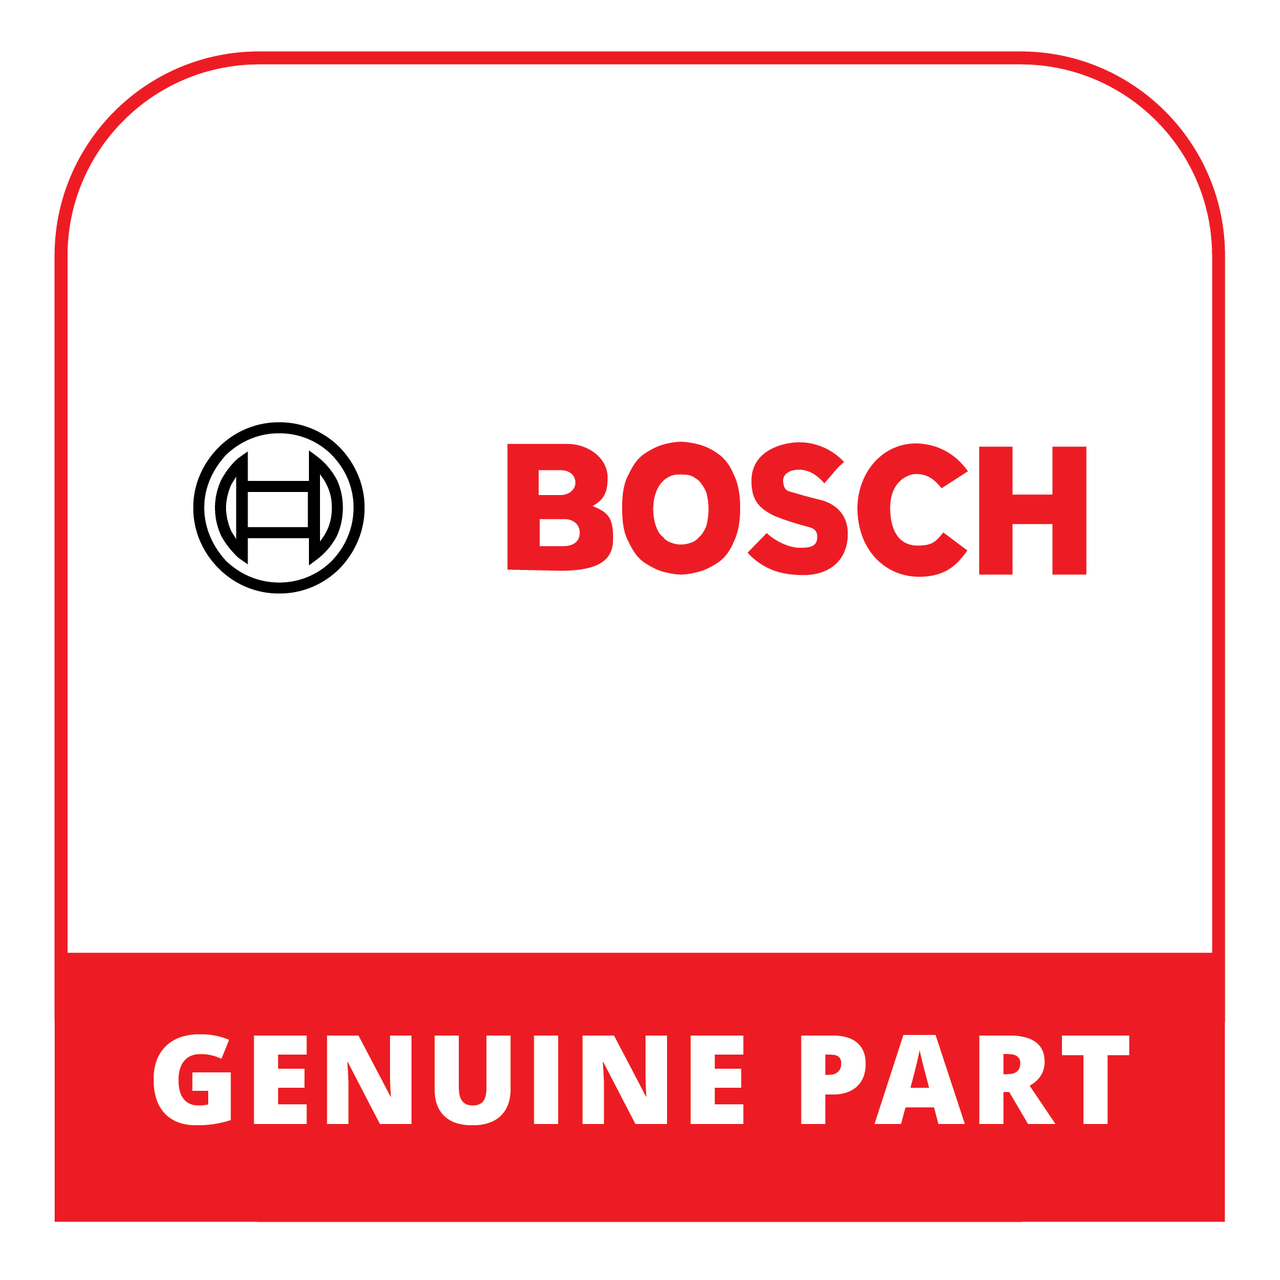 Bosch (Thermador) 20004144 - Panel-Facia - Genuine Bosch (Thermador) Part